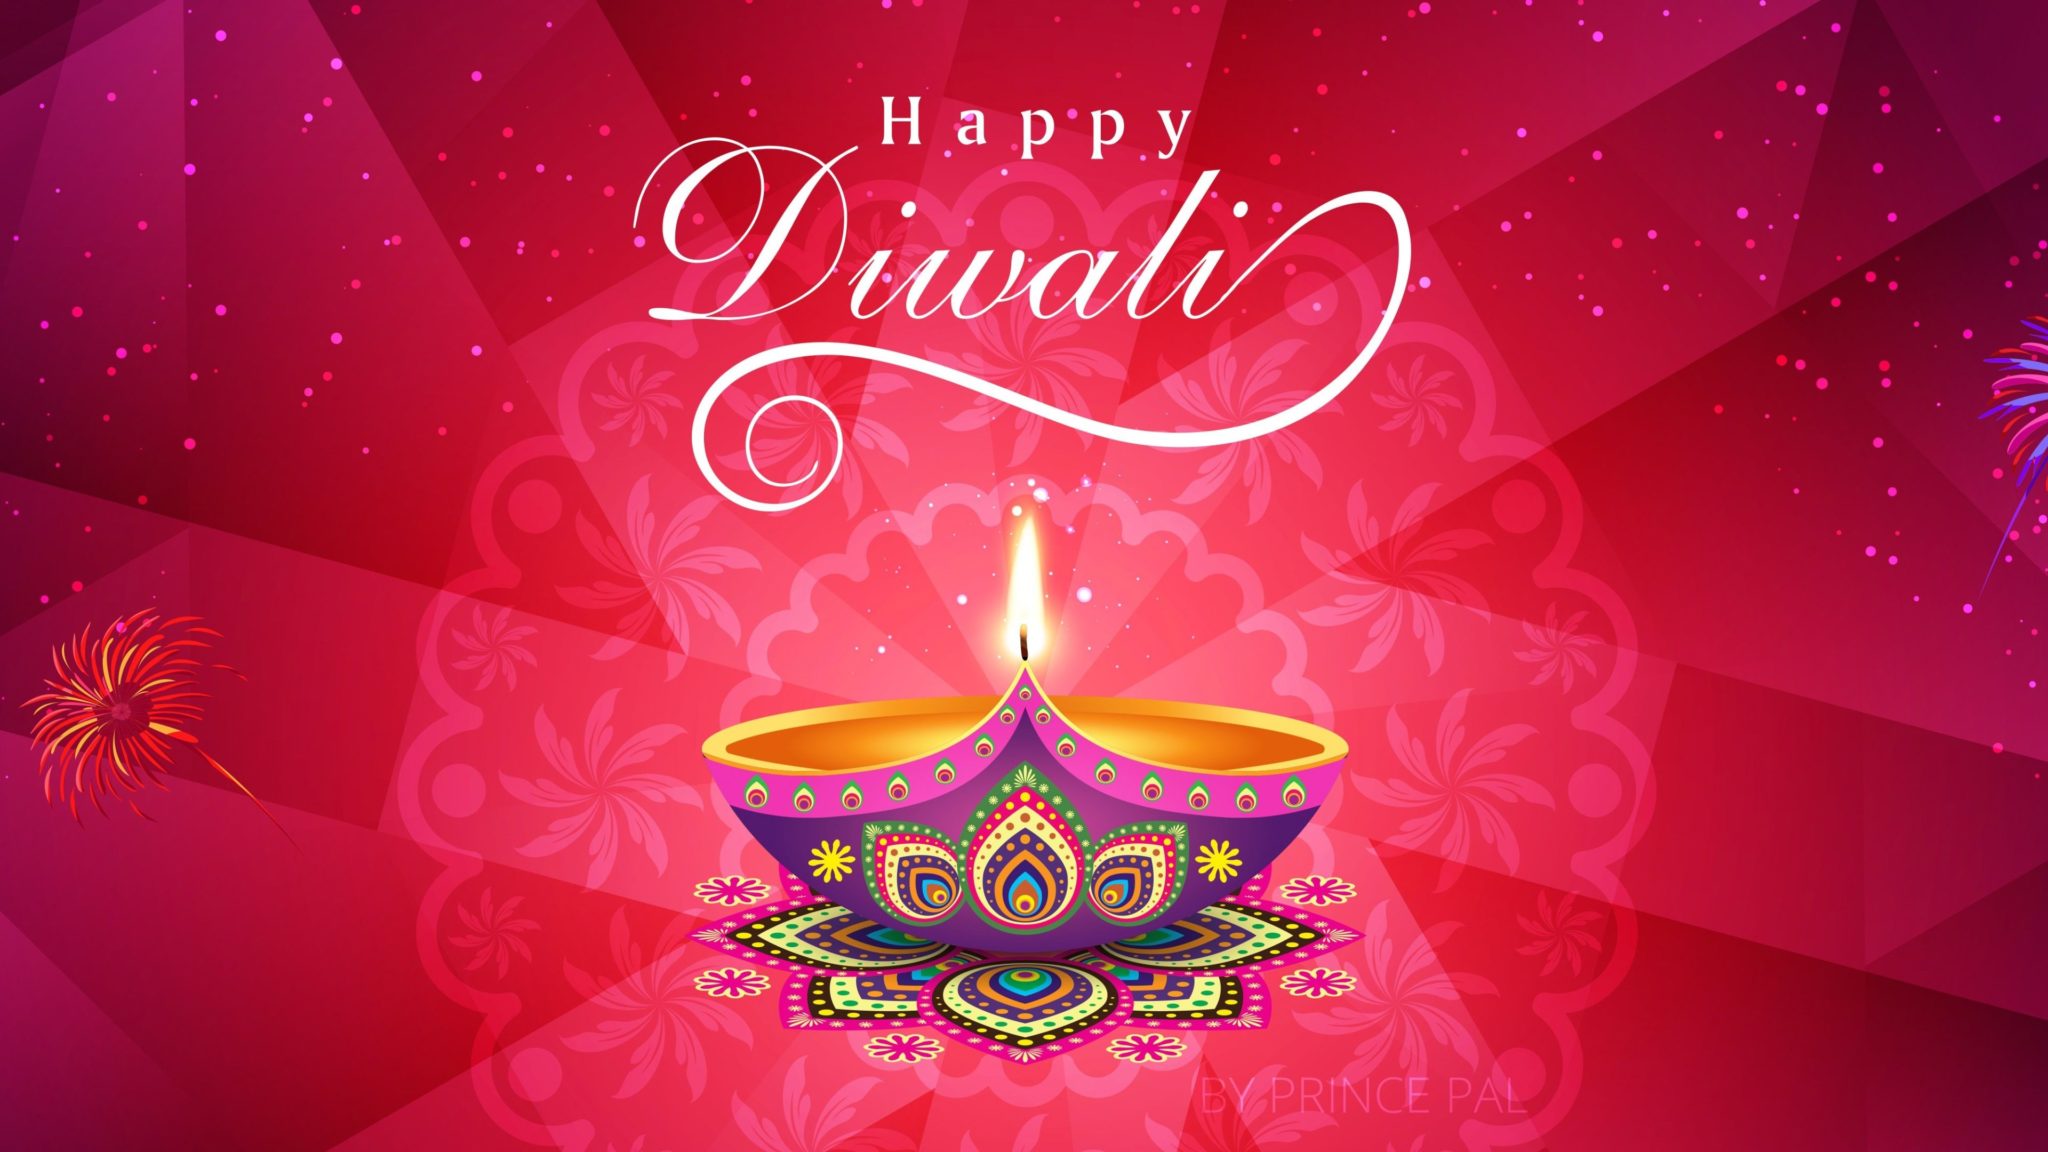 Happy Diwali WHatsapp status